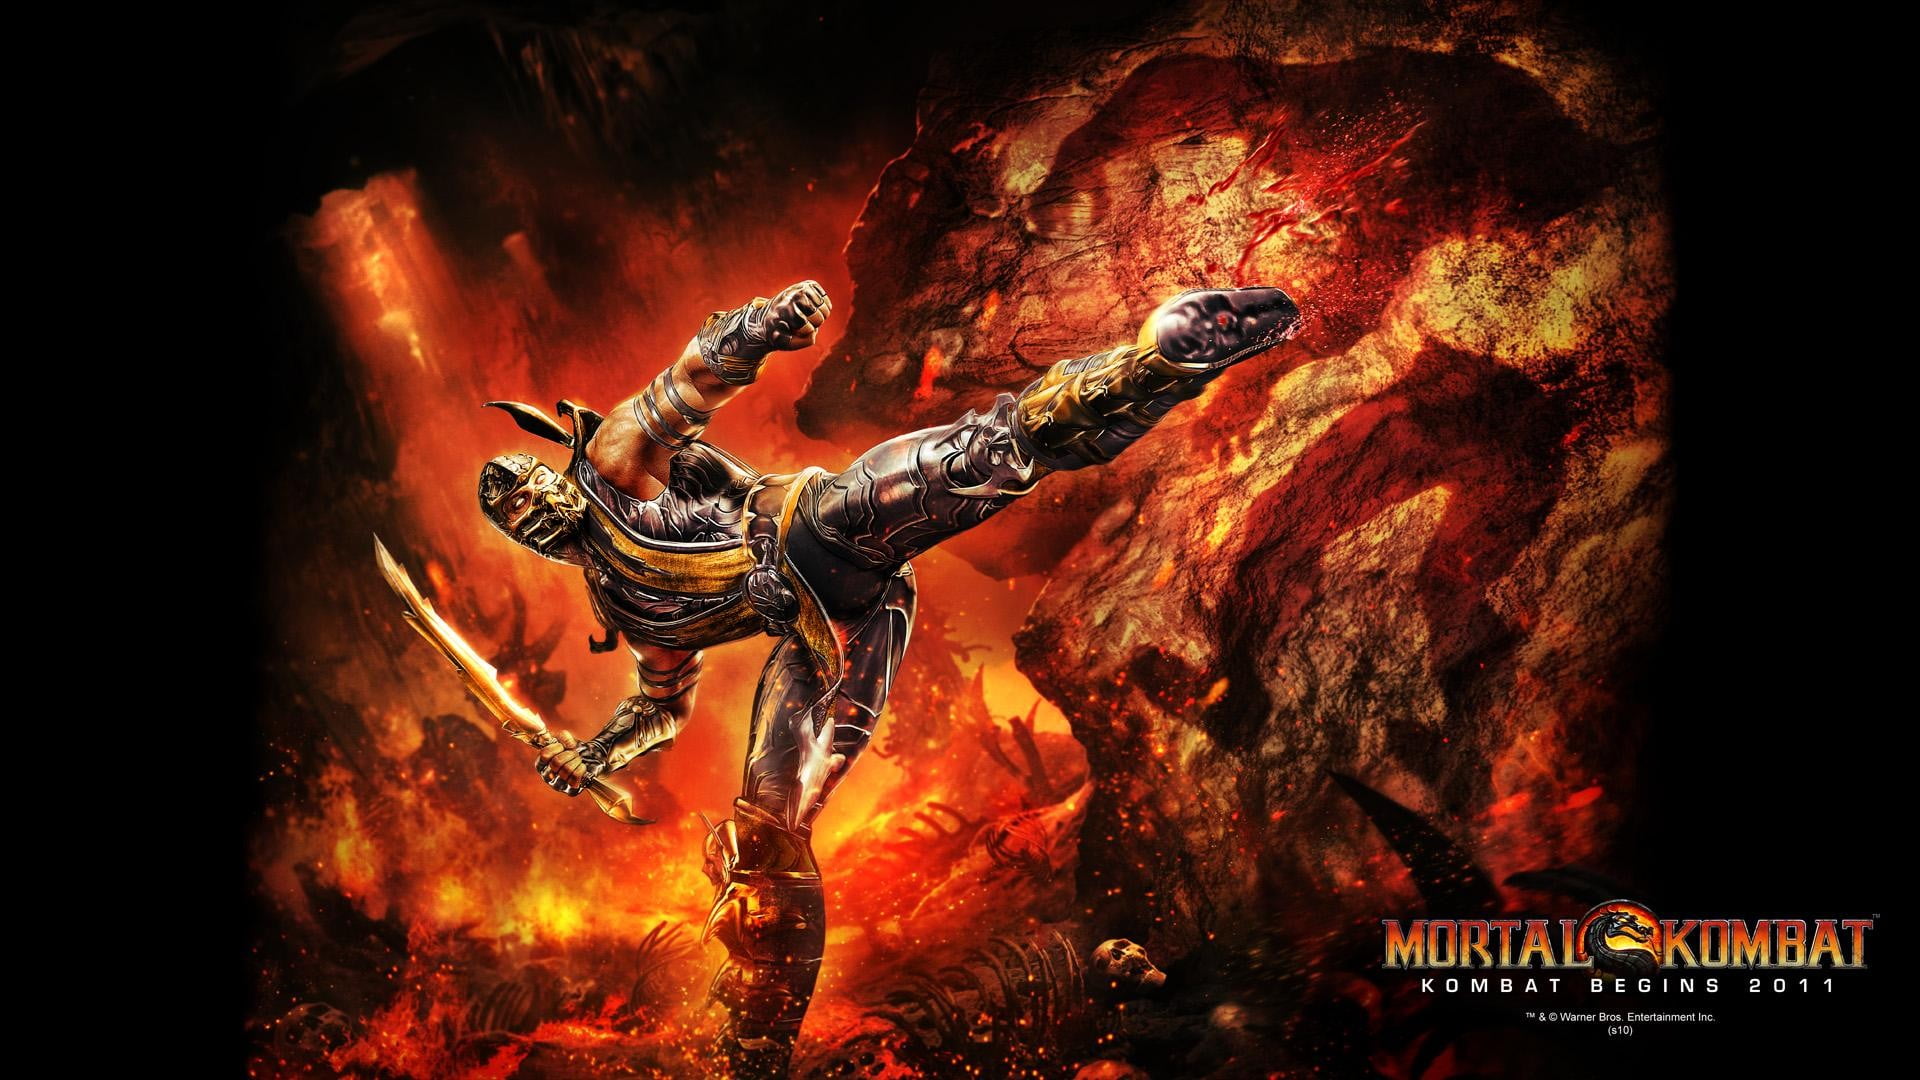 Mortal Kombat Scorpion digital wallpaper, video games